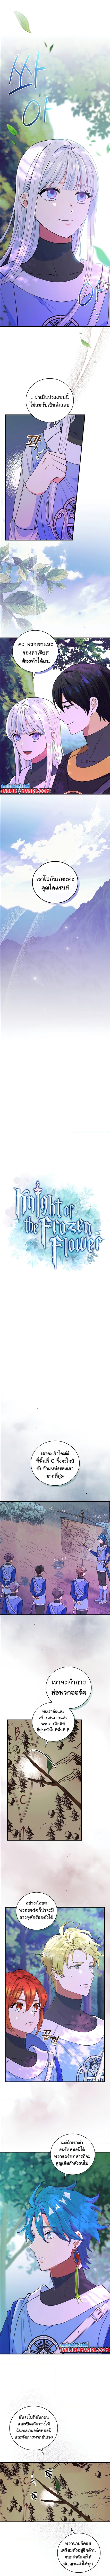 Knight of the Frozen Flower à¸à¸­à¸à¸à¸µà¹ 43 (2)